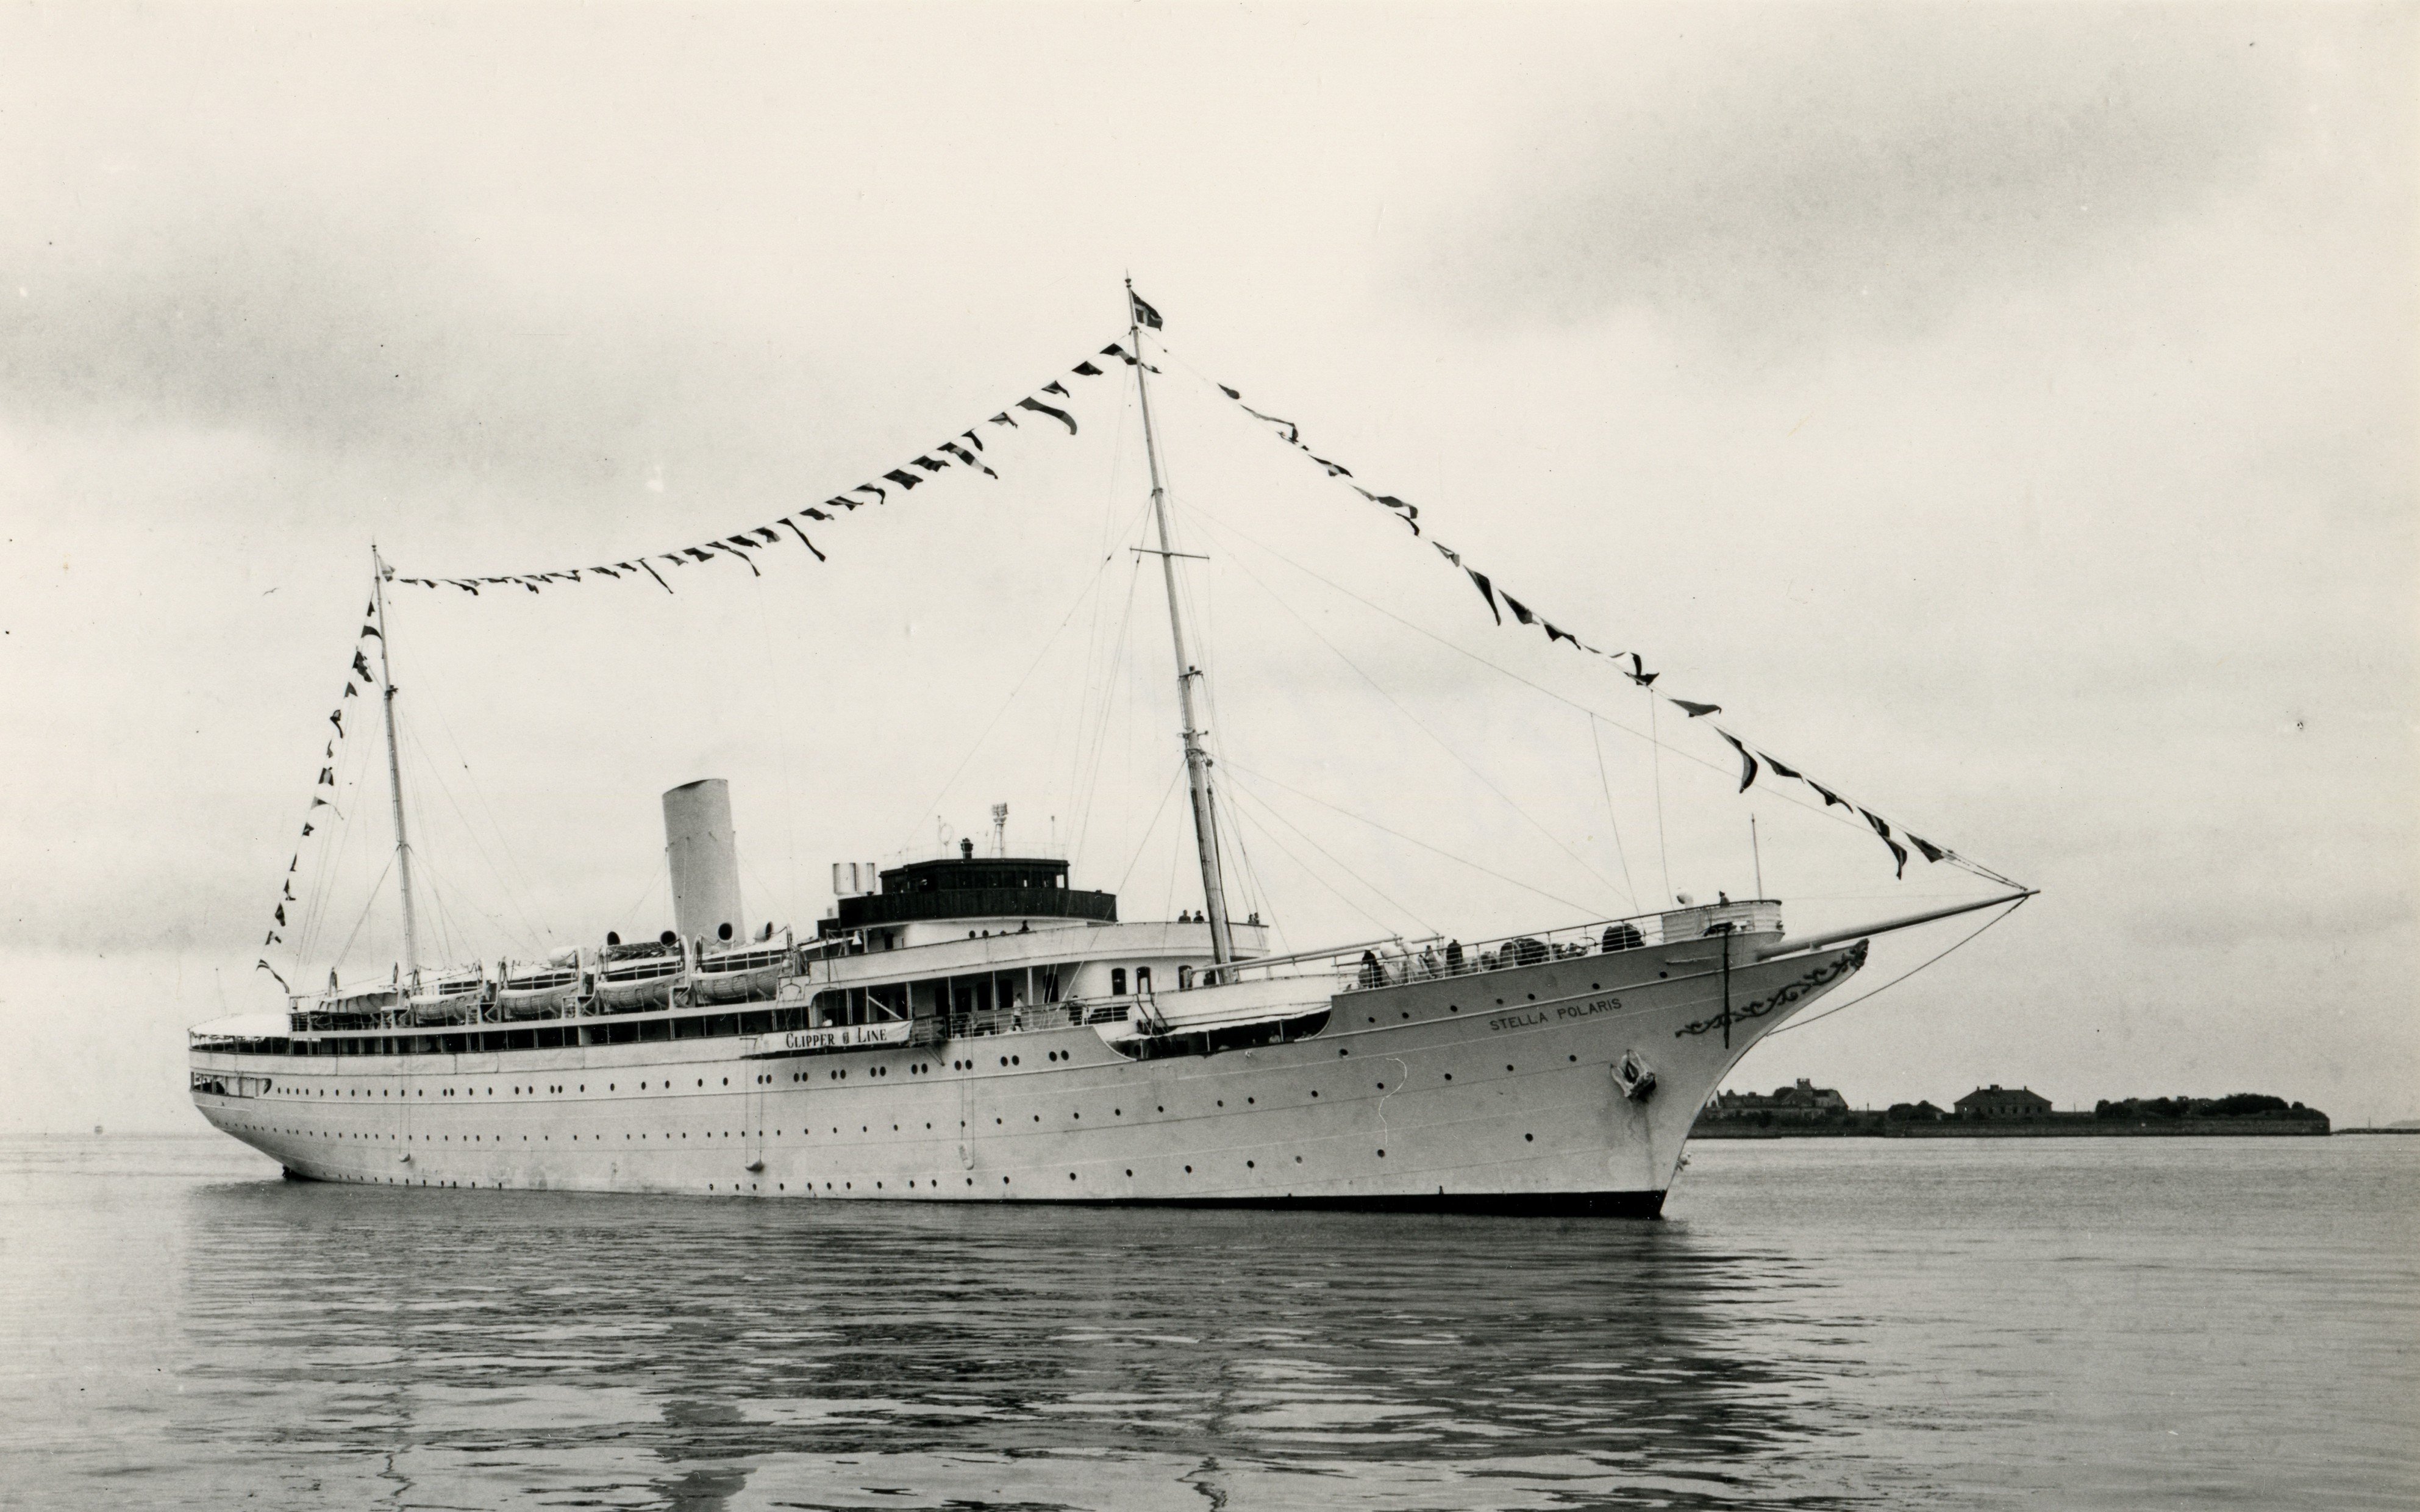 The Stella Polaris, in 1954.